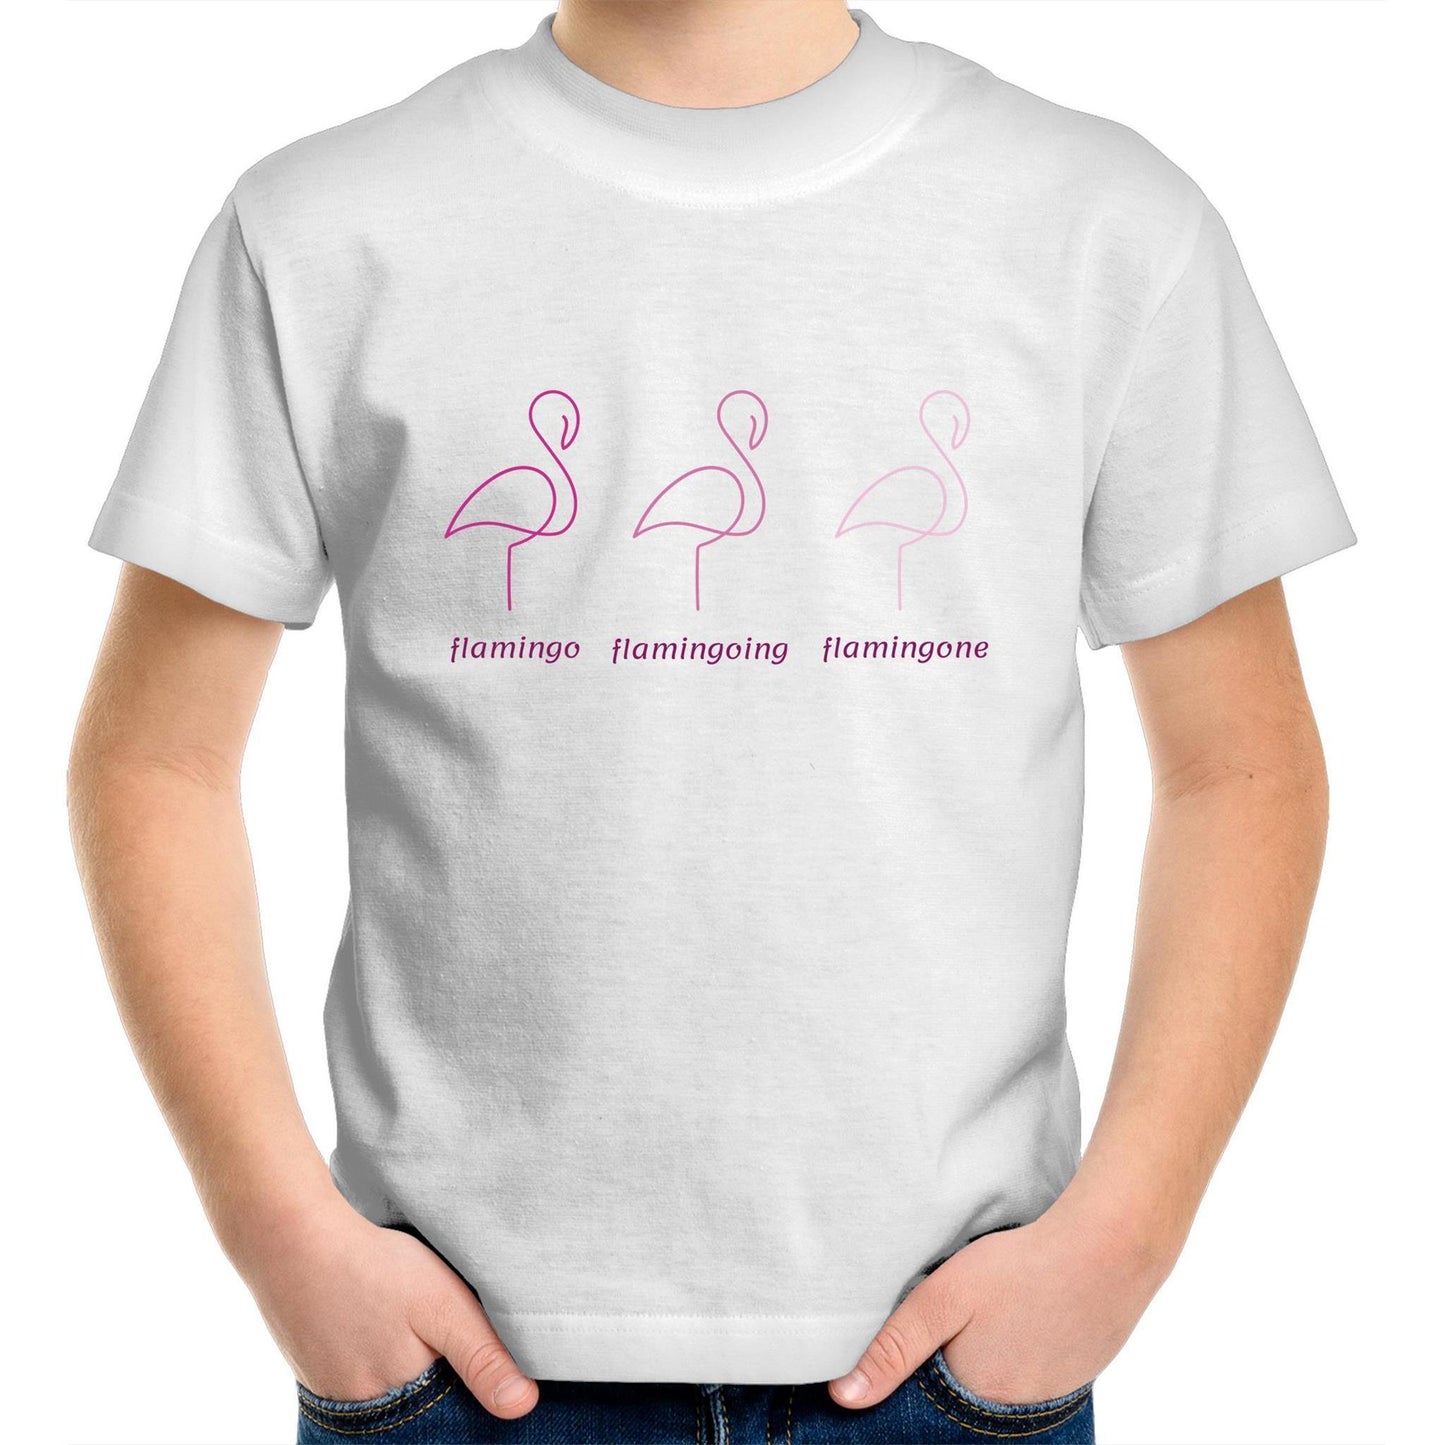 Flamingo - Kids Youth Crew T-Shirt White Kids Youth T-shirt animal